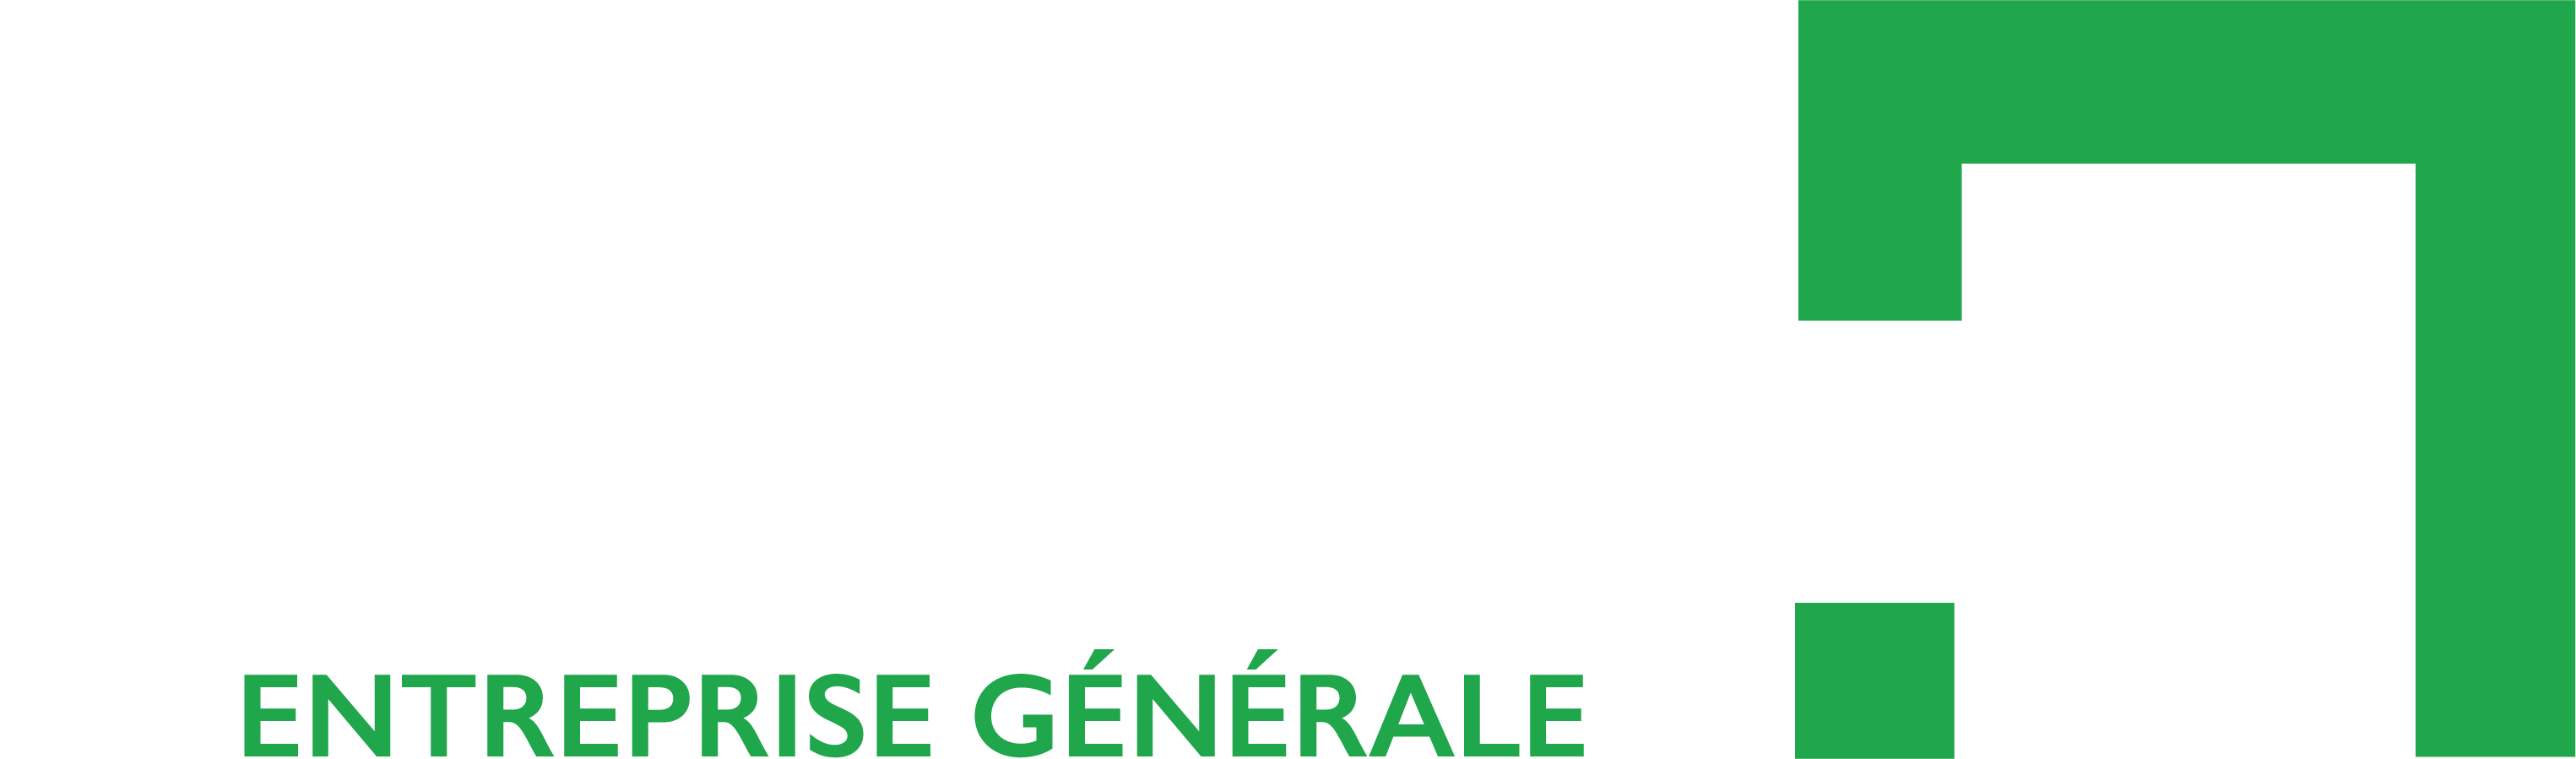 logo Jamar entreprise Générale